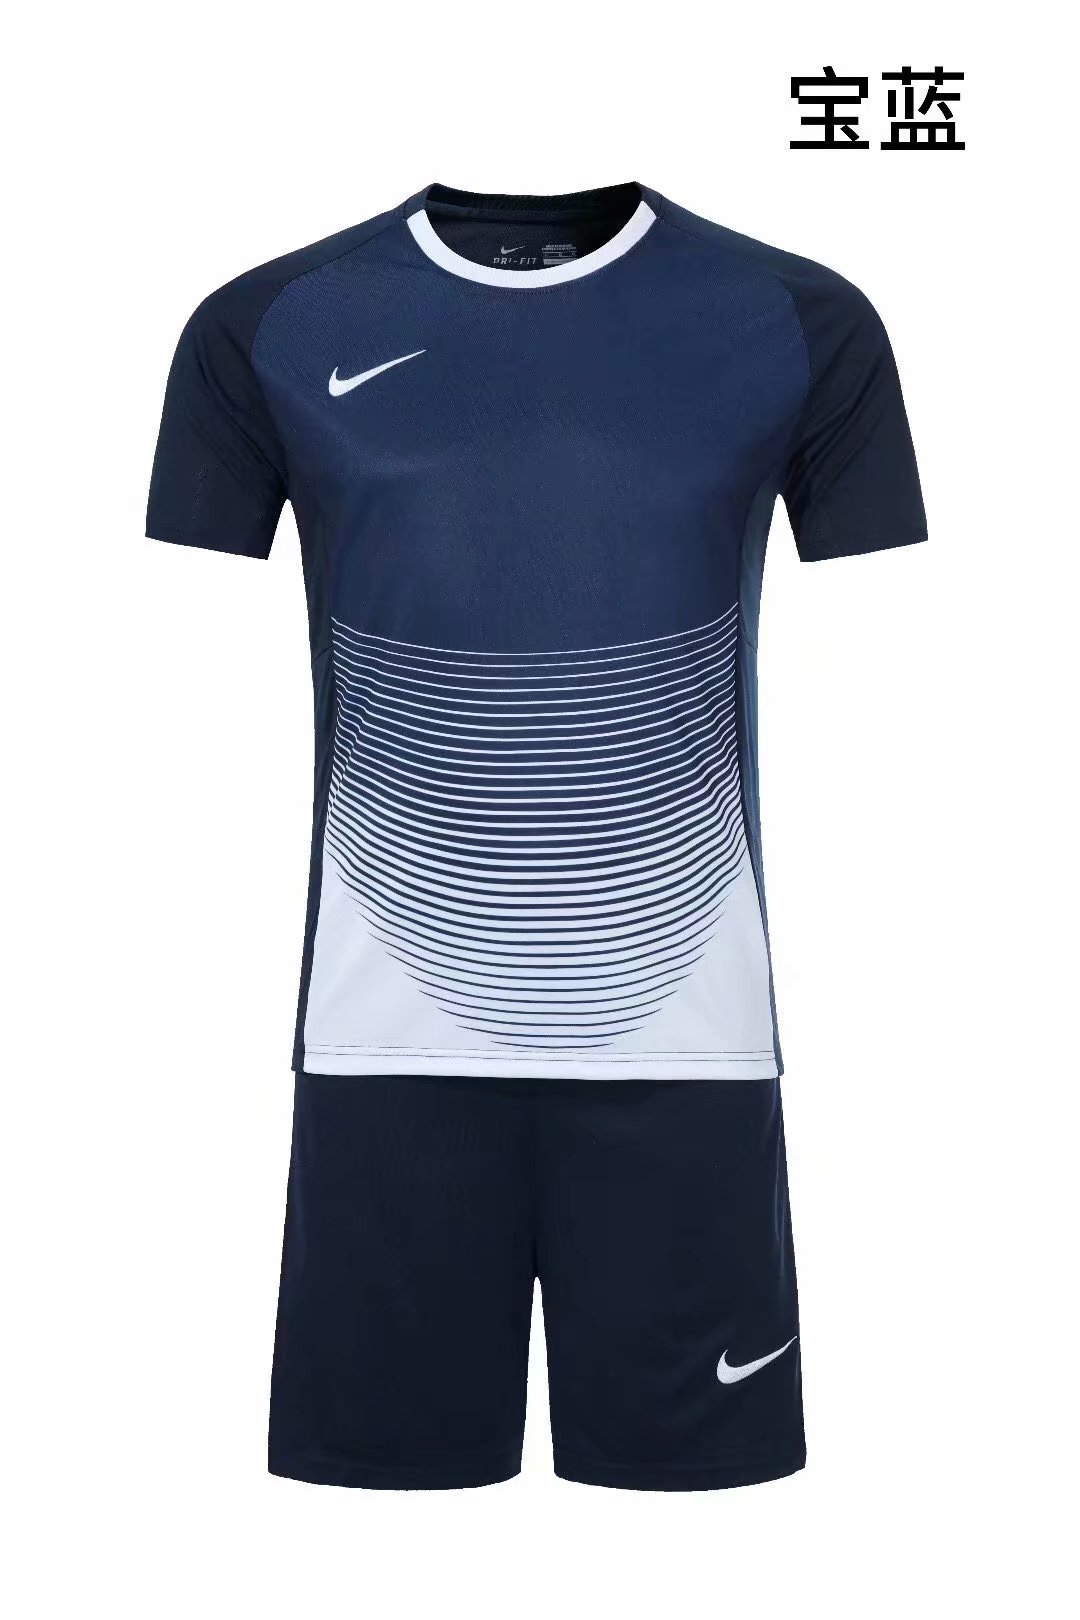 Nike Soccer Team Uniforms 012